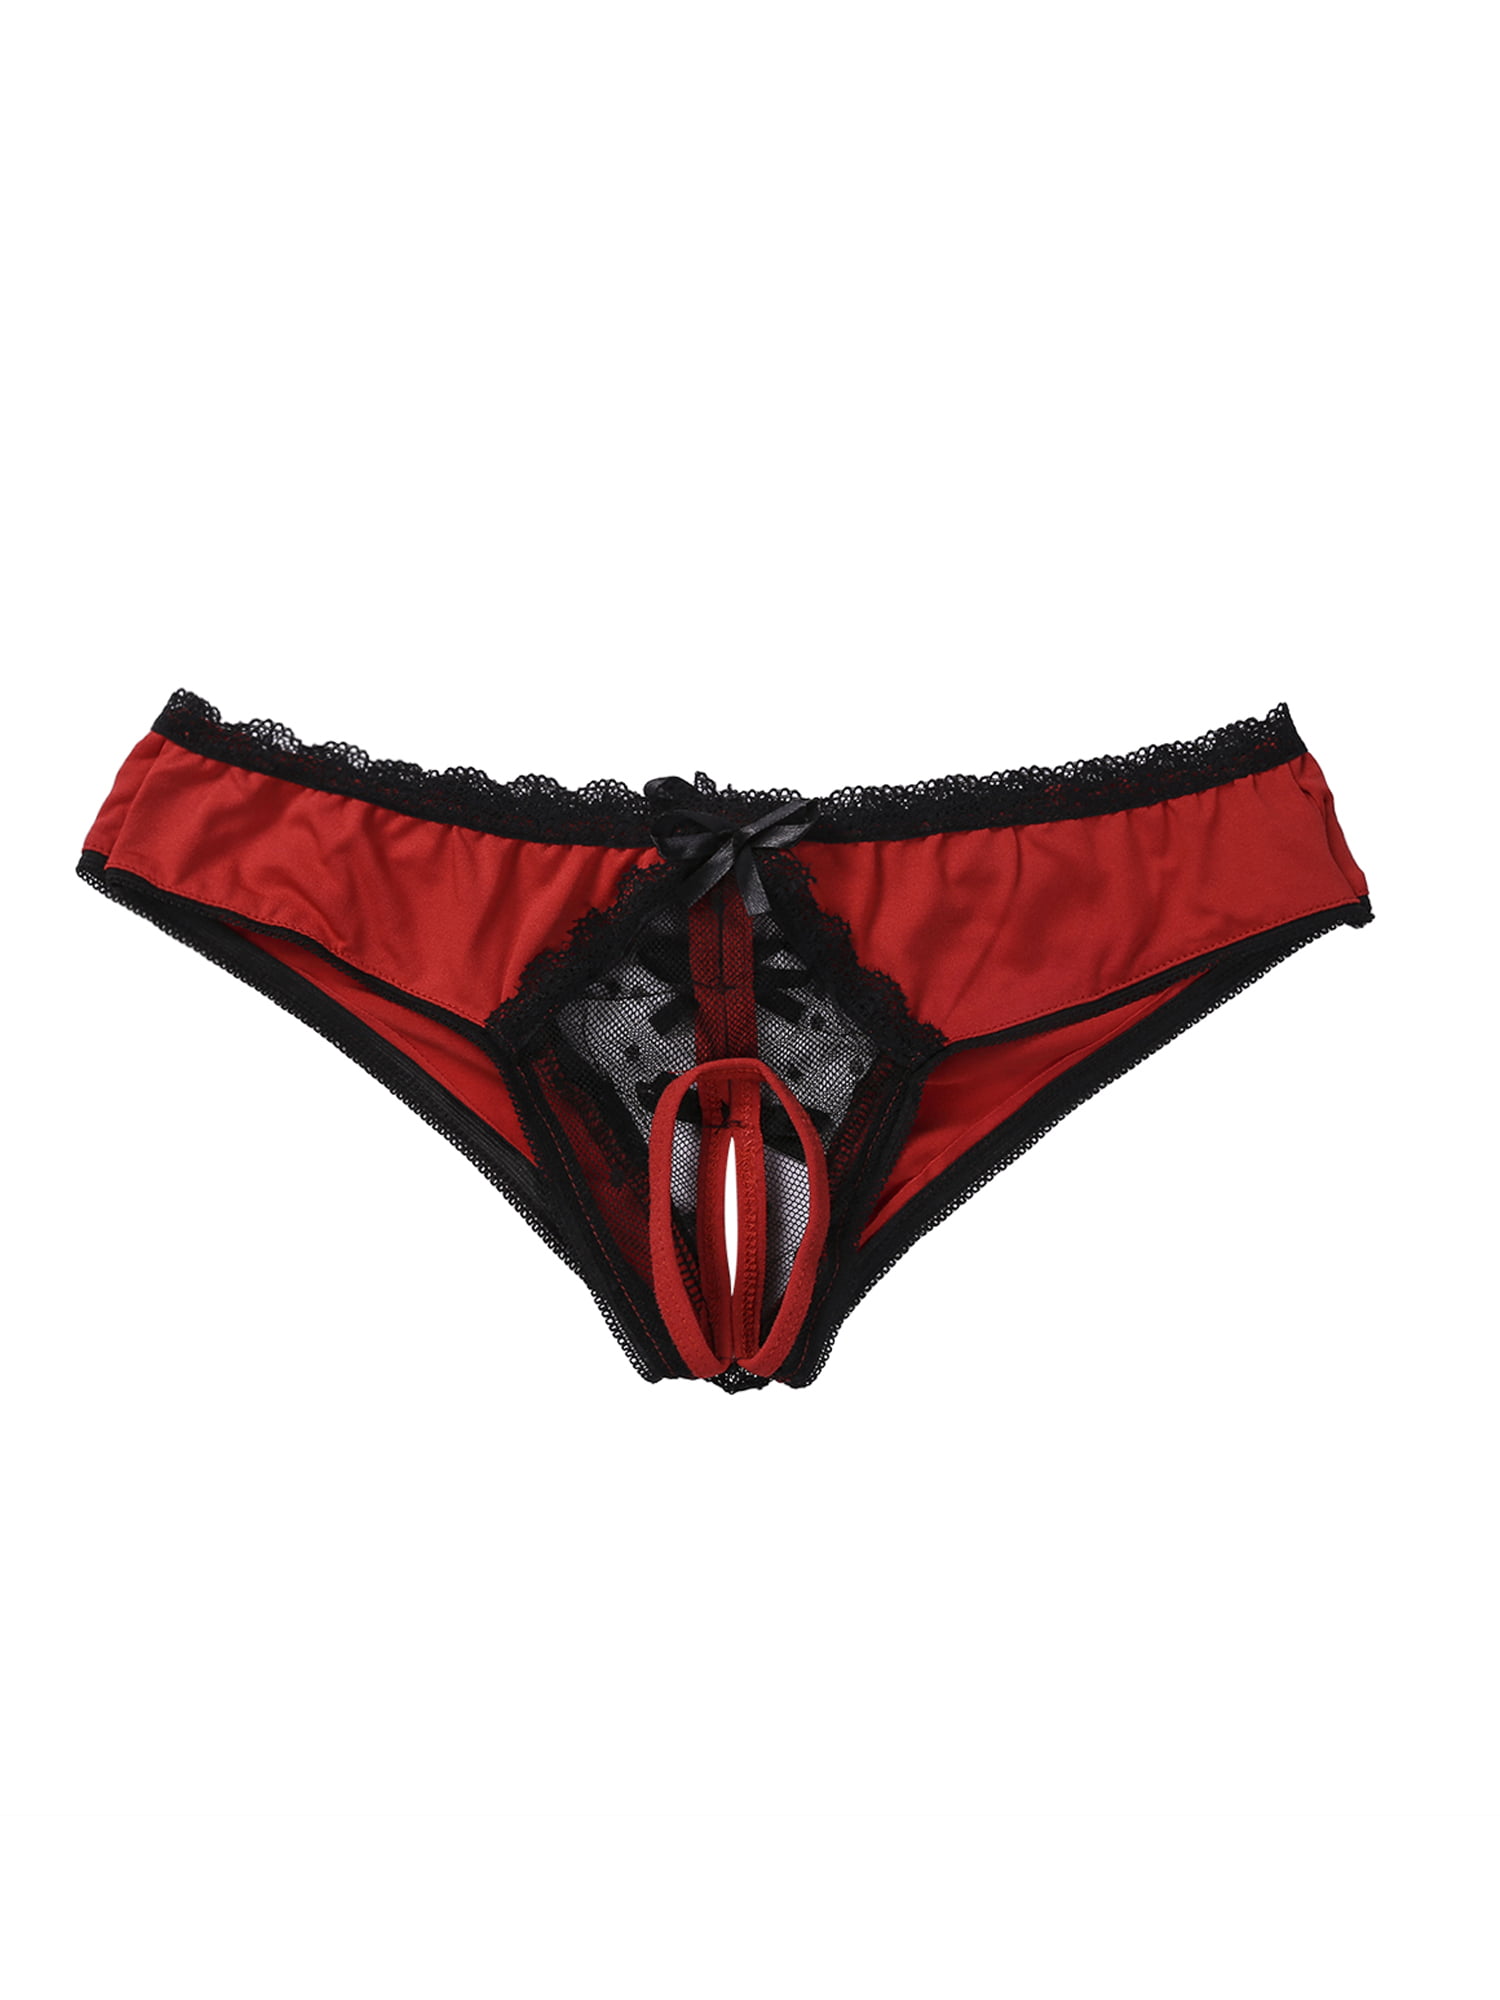 Calsunbaby Women Thongs Panties Open Crotch Crotchless Underwear Night G- string XXL 